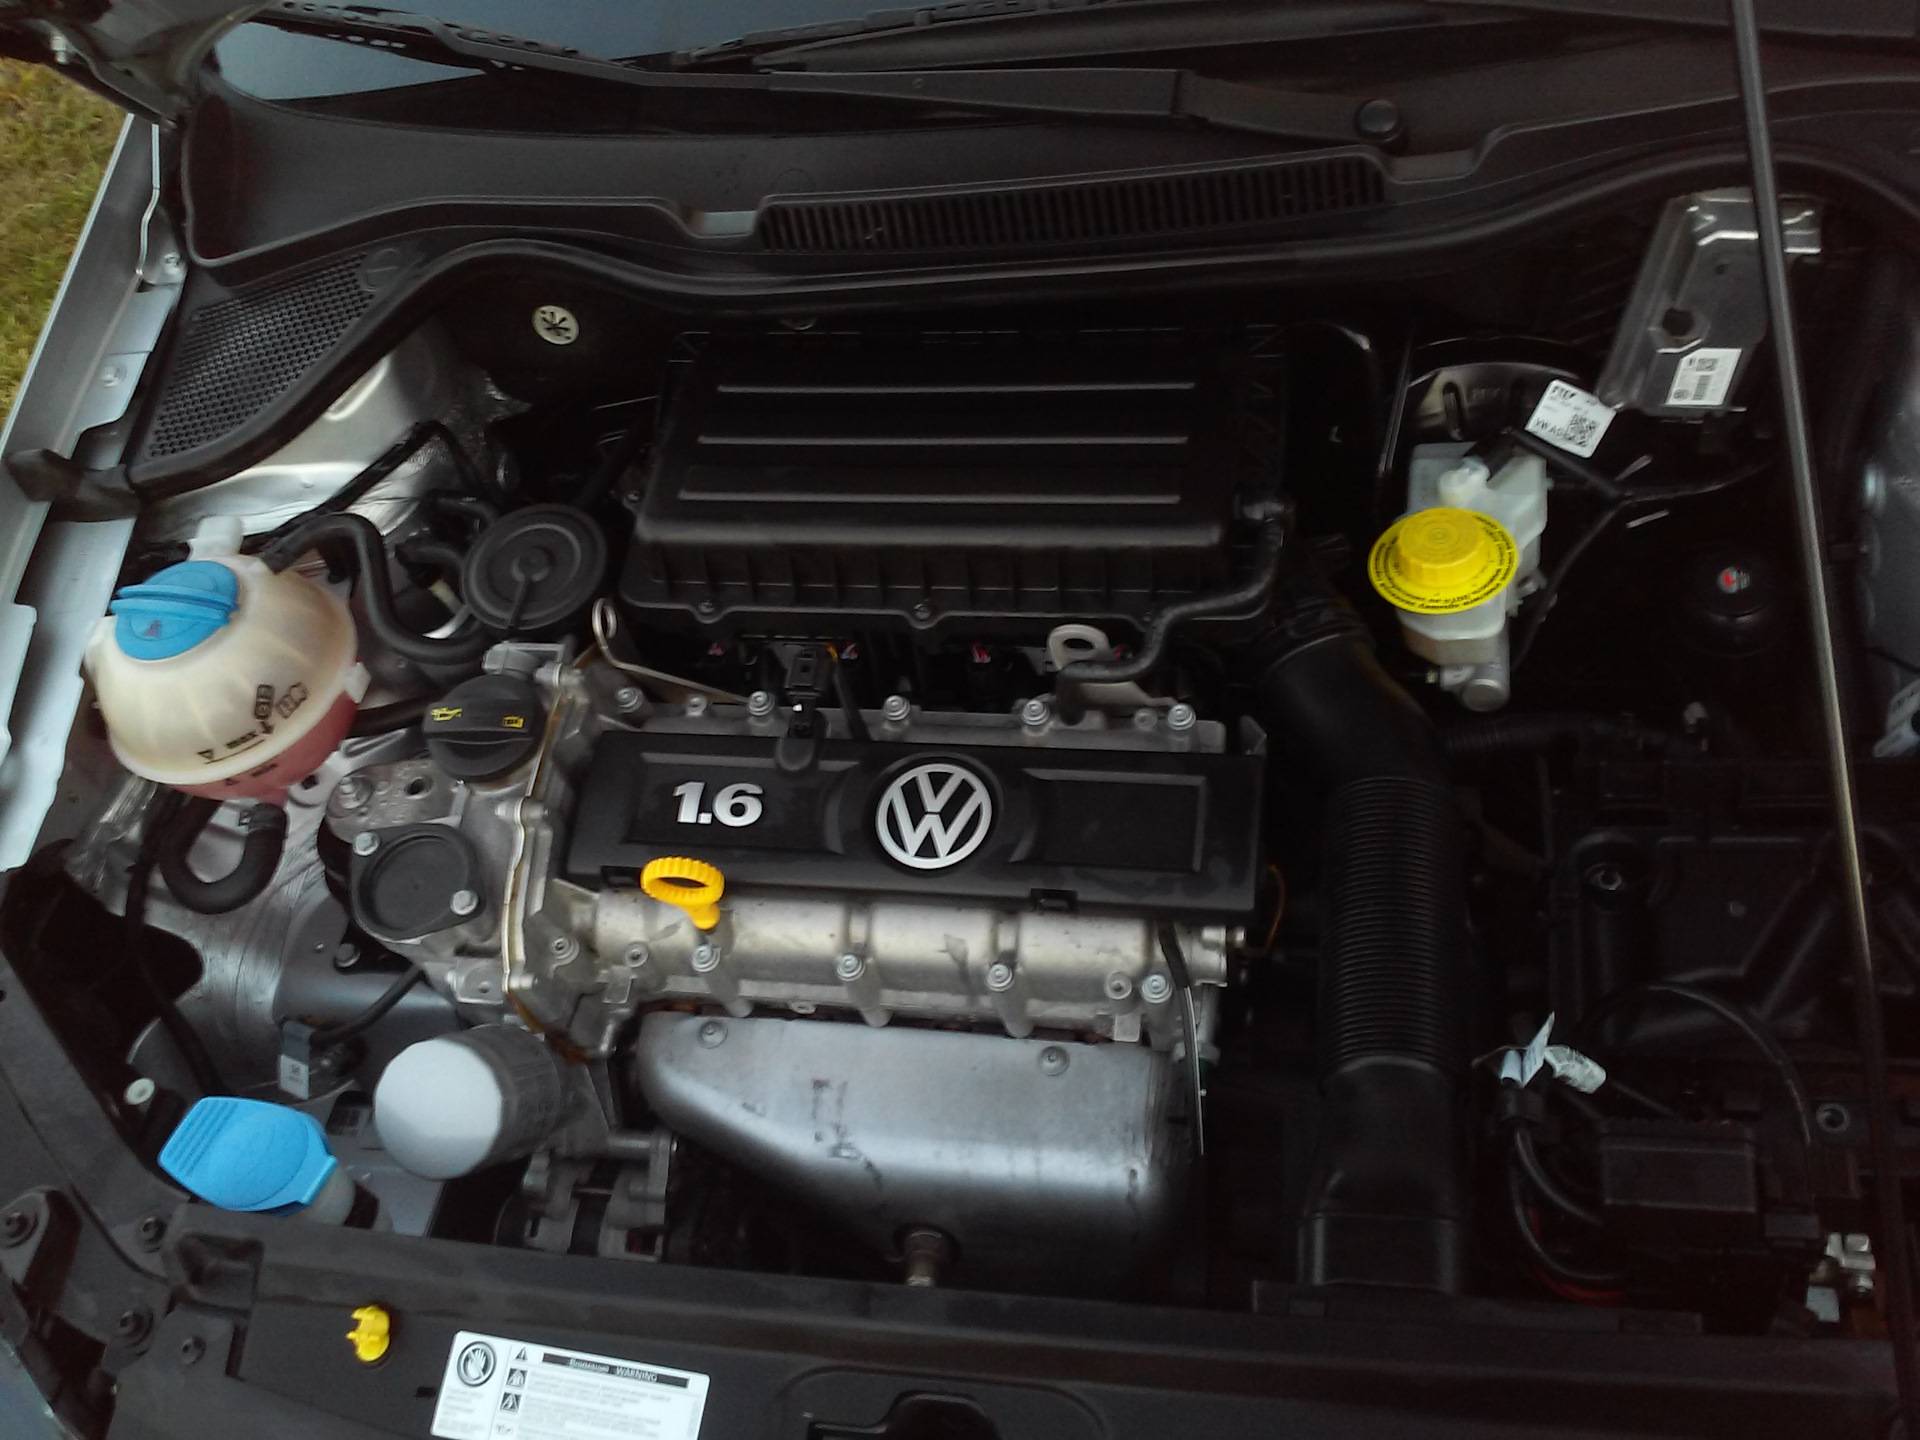 Volkswagen polo мотор. Мотор поло седан 1.6. Двигатель Фольксваген поло седан. Двигатель поло седан 1.6. Мотор Фольксваген поло 1.6.